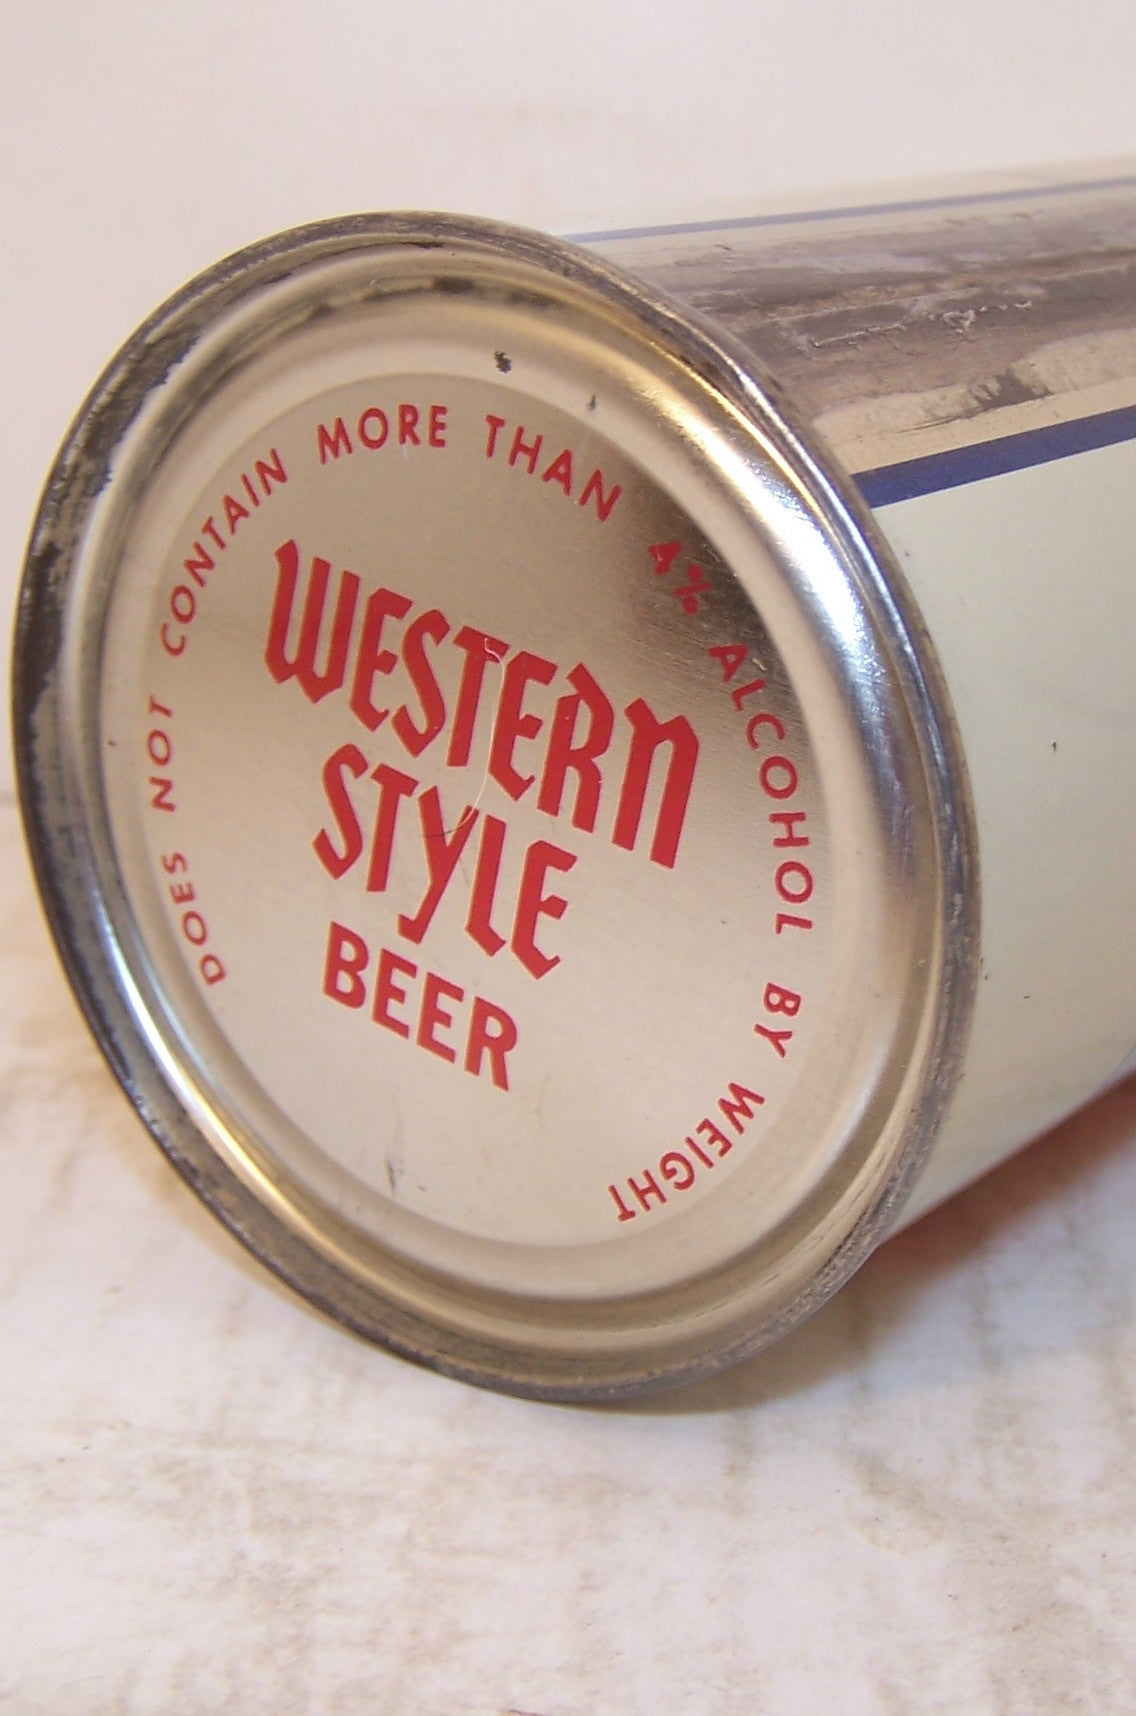 Western Style Pilsener Beer, USBC 145-11. Grade 1. Sold on 06/23/18